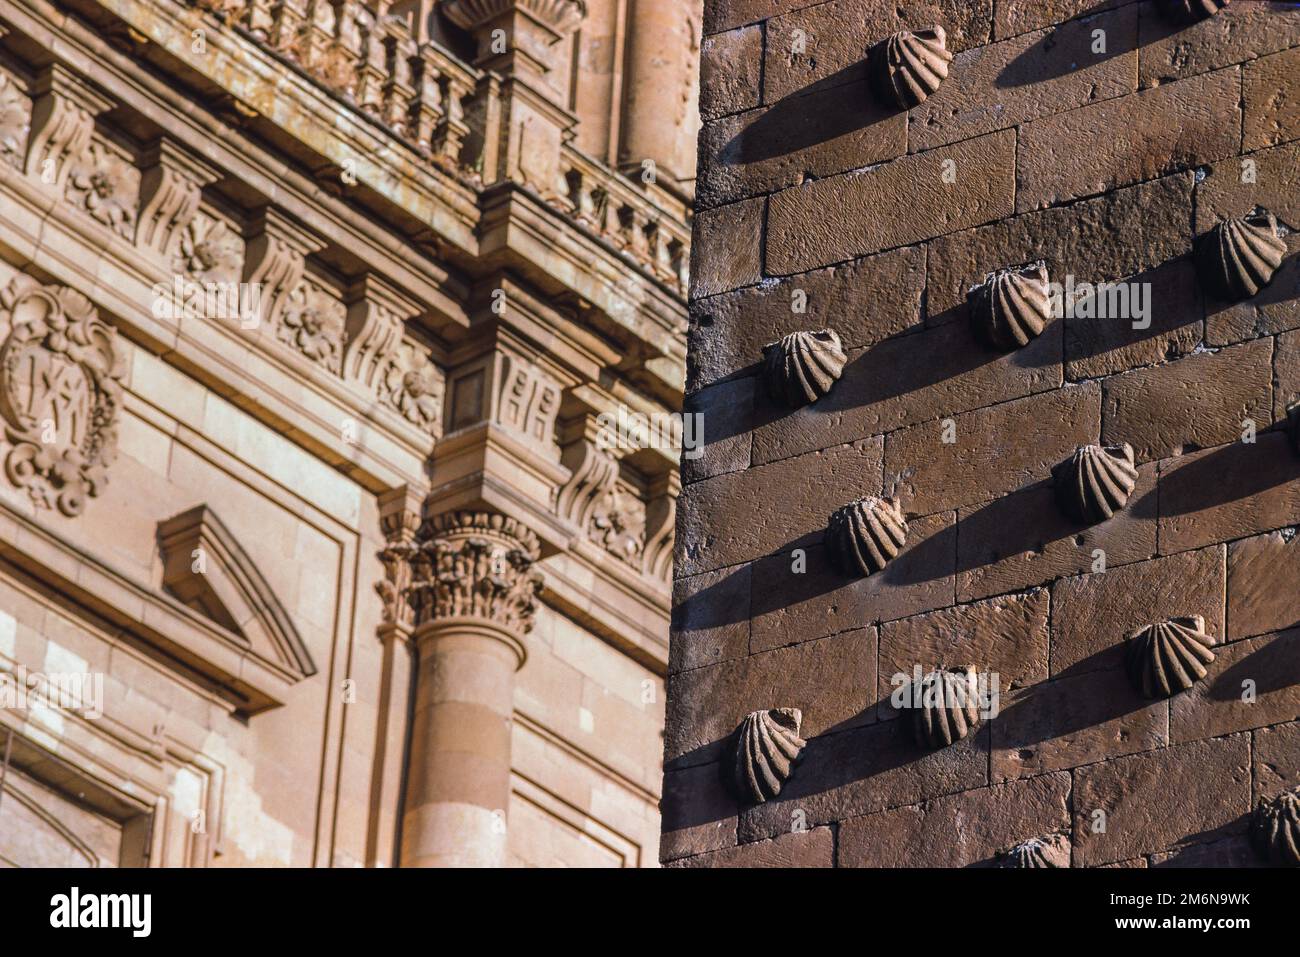 Salamanca Spain, contrasting architecture in the University area: the Baroque La Clerecia Church (L) and the Renaissance-era Casa de las Conchas (R) Stock Photo